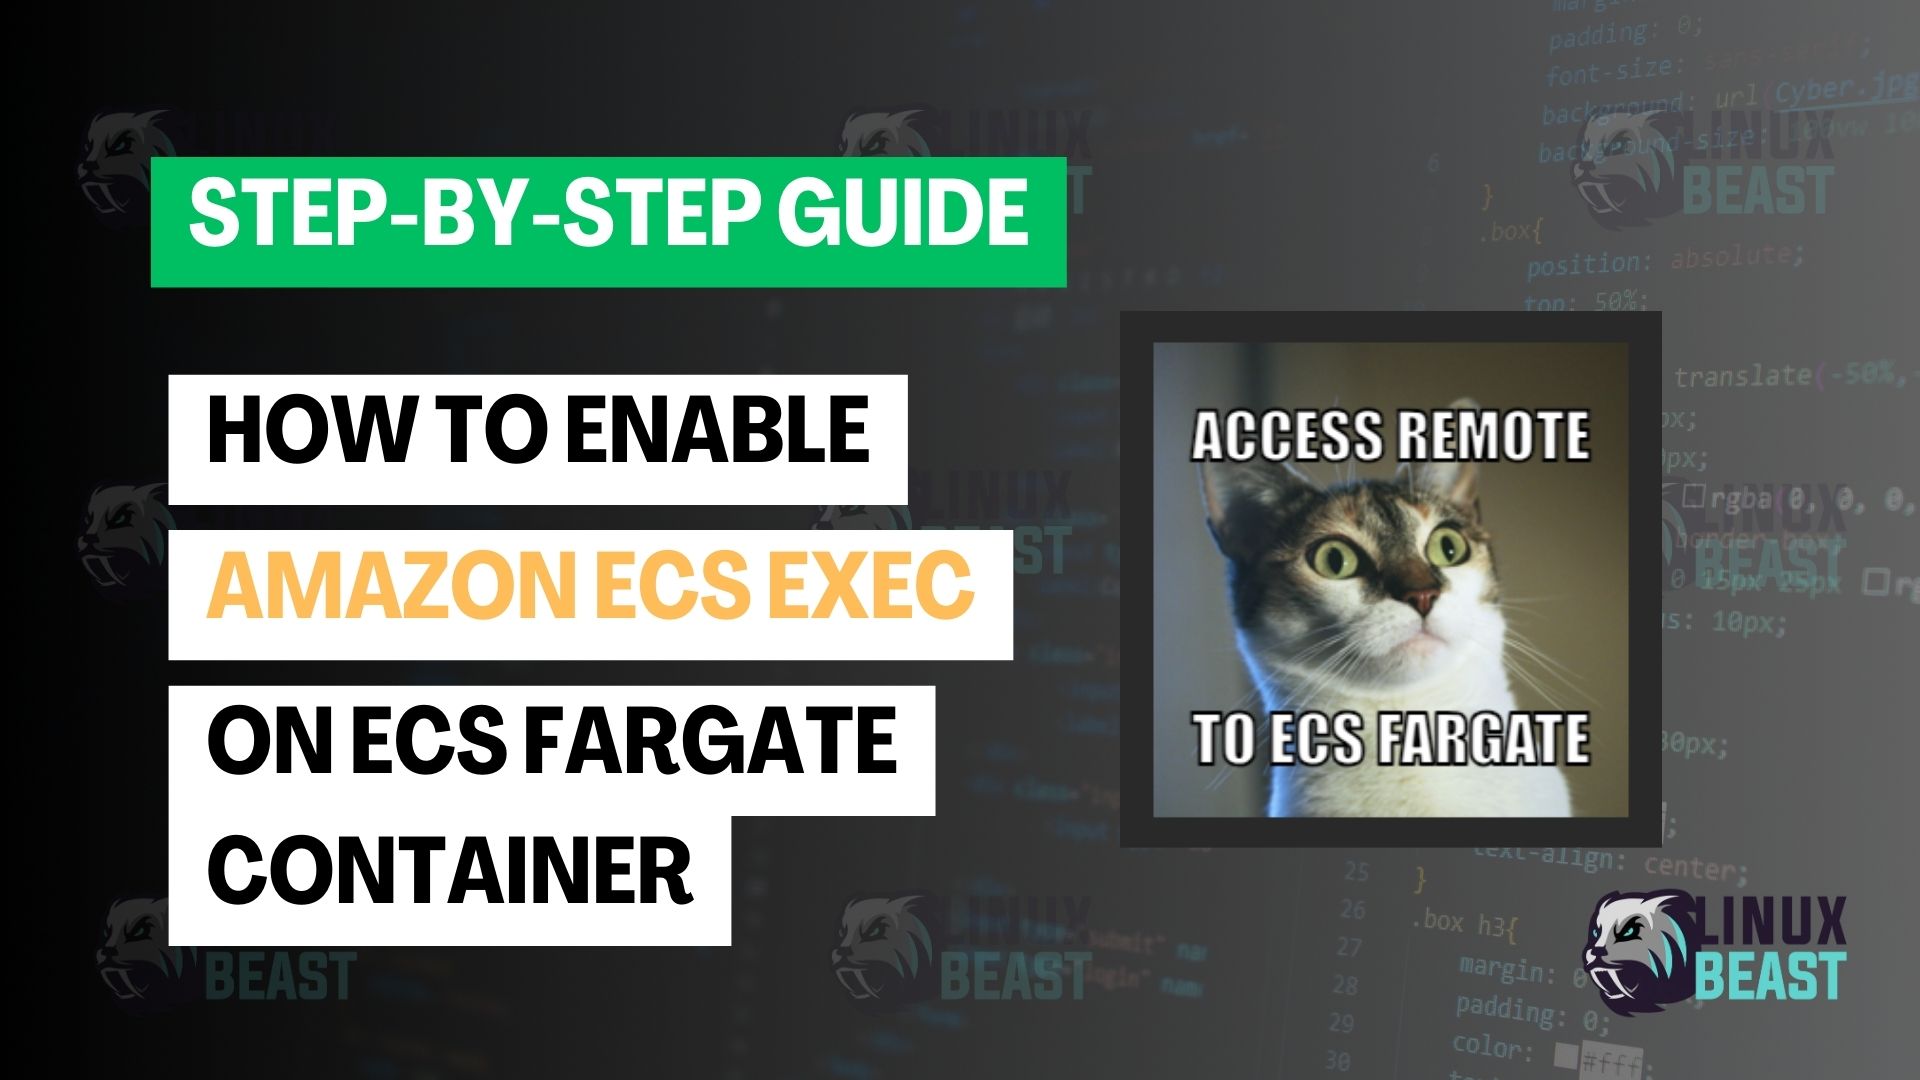 How to Enable Amazon ECS Exec on ECS Fargate Containers